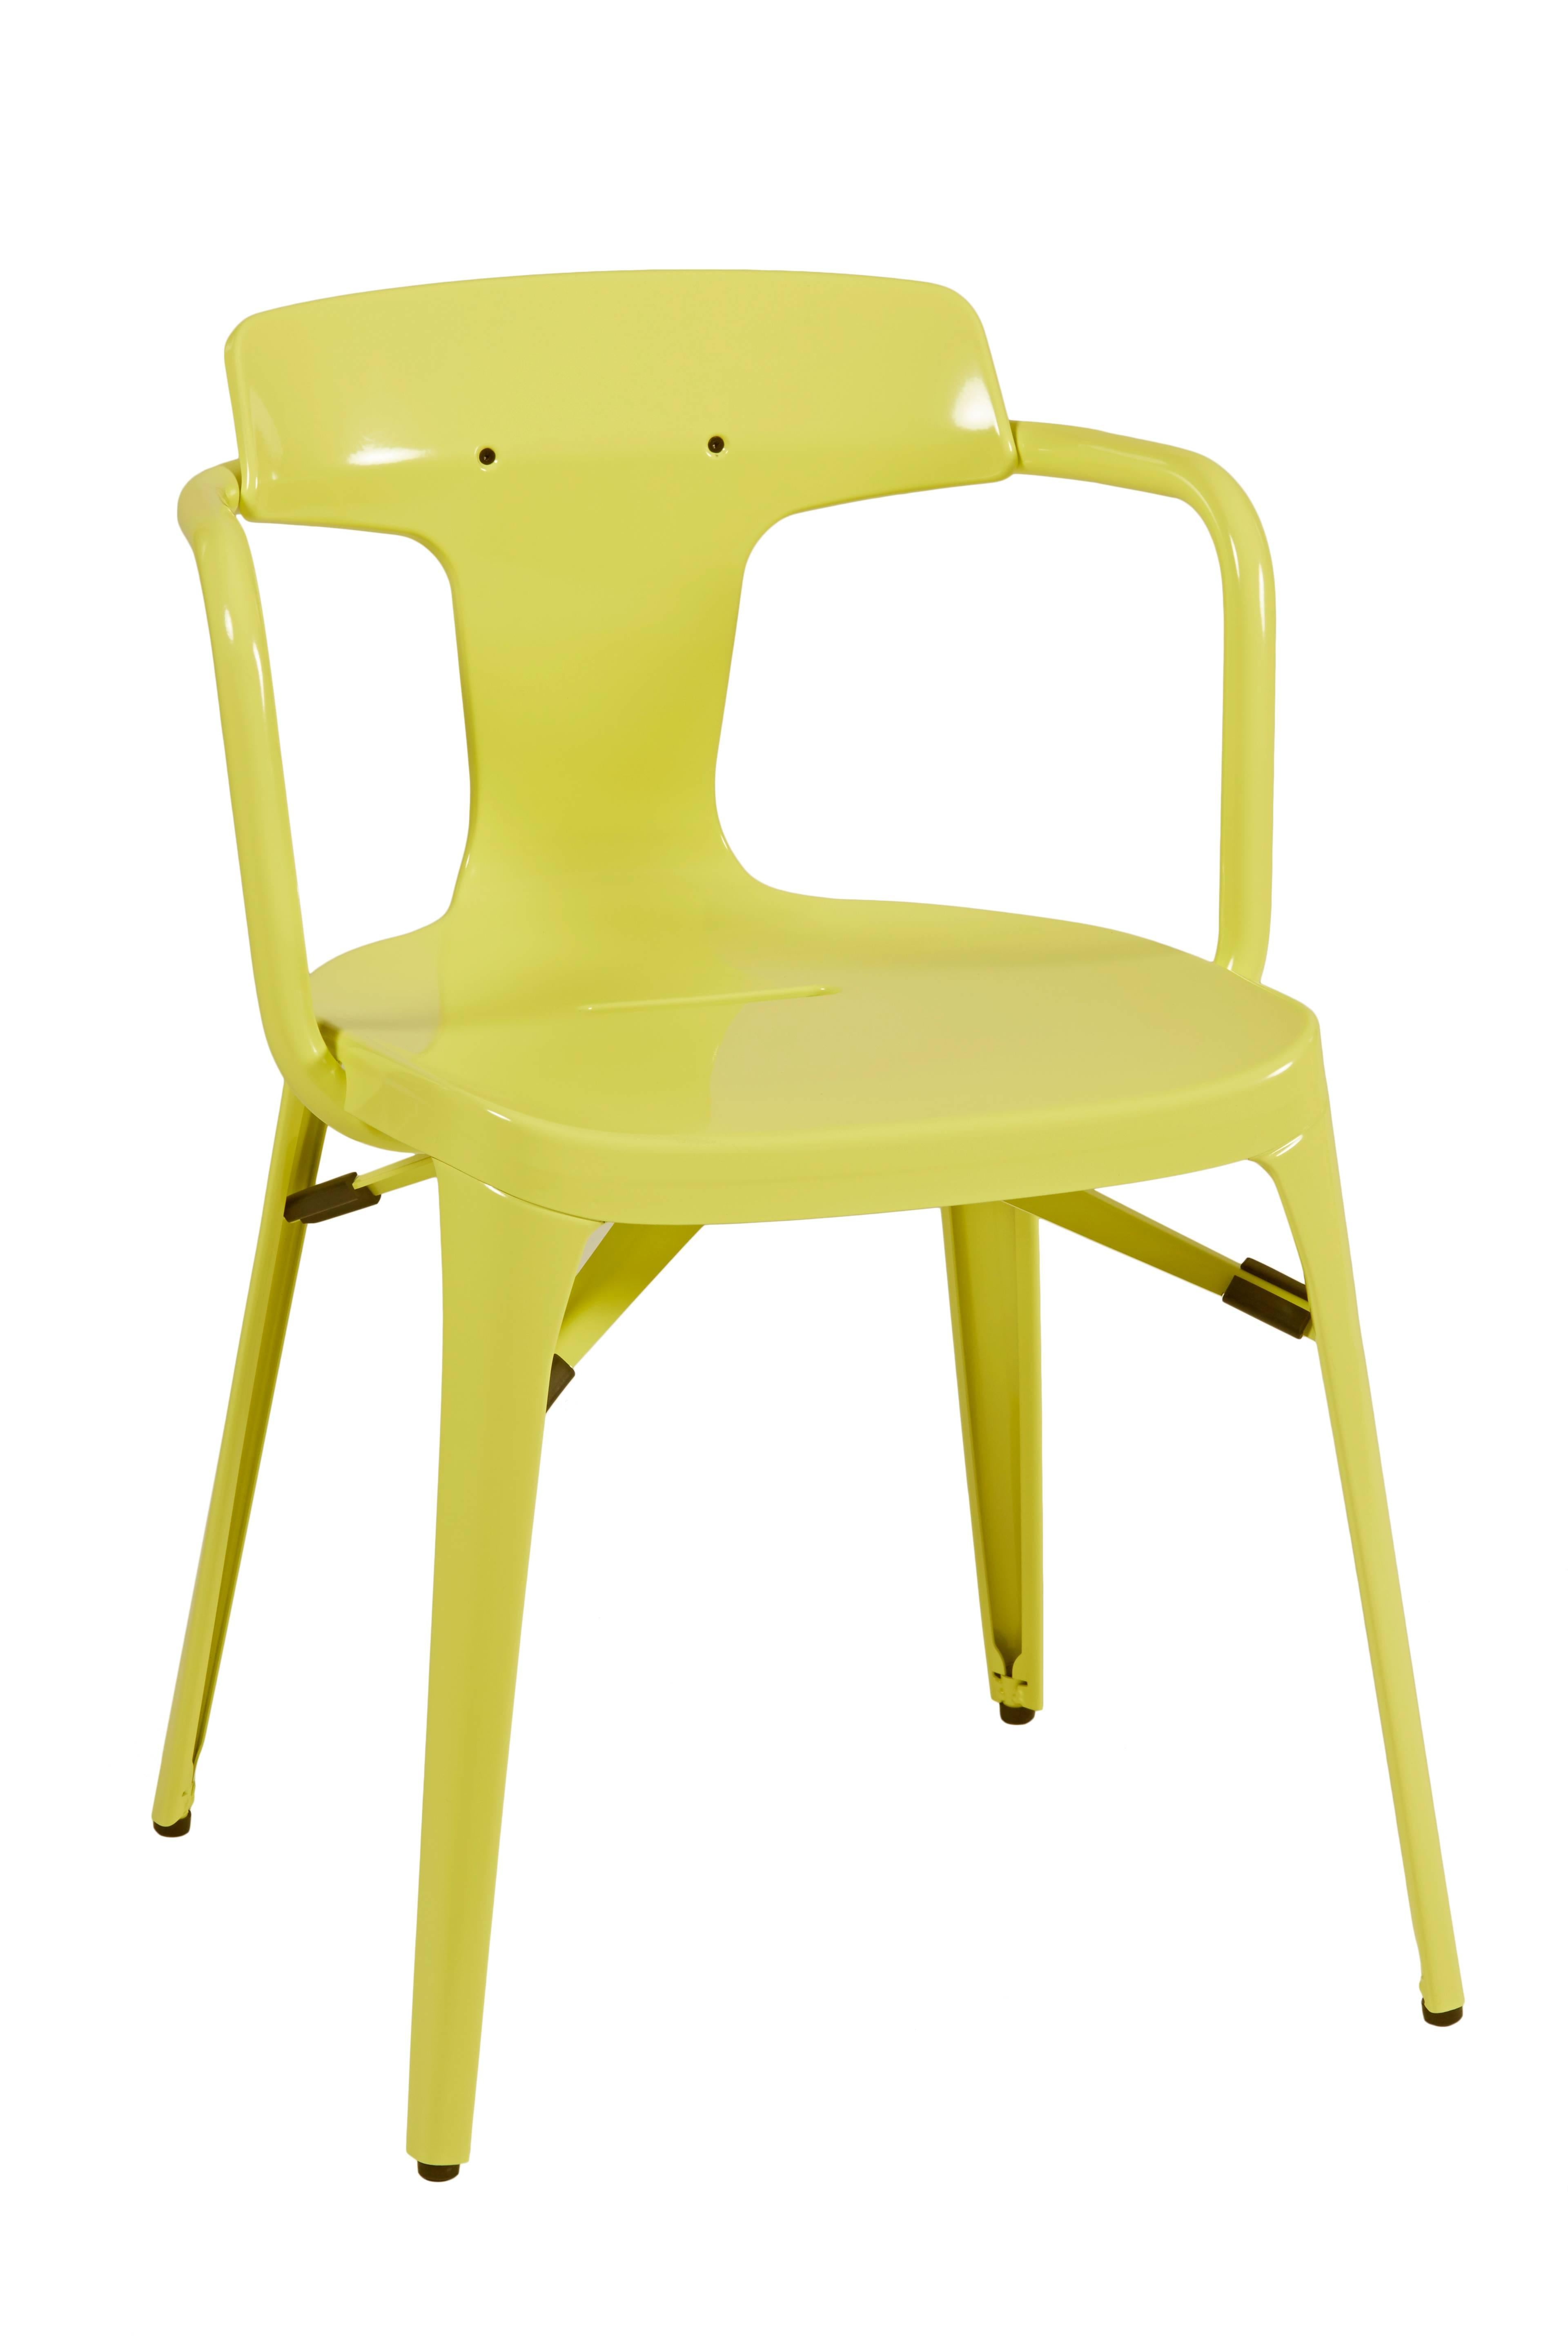 pastel yellow chair